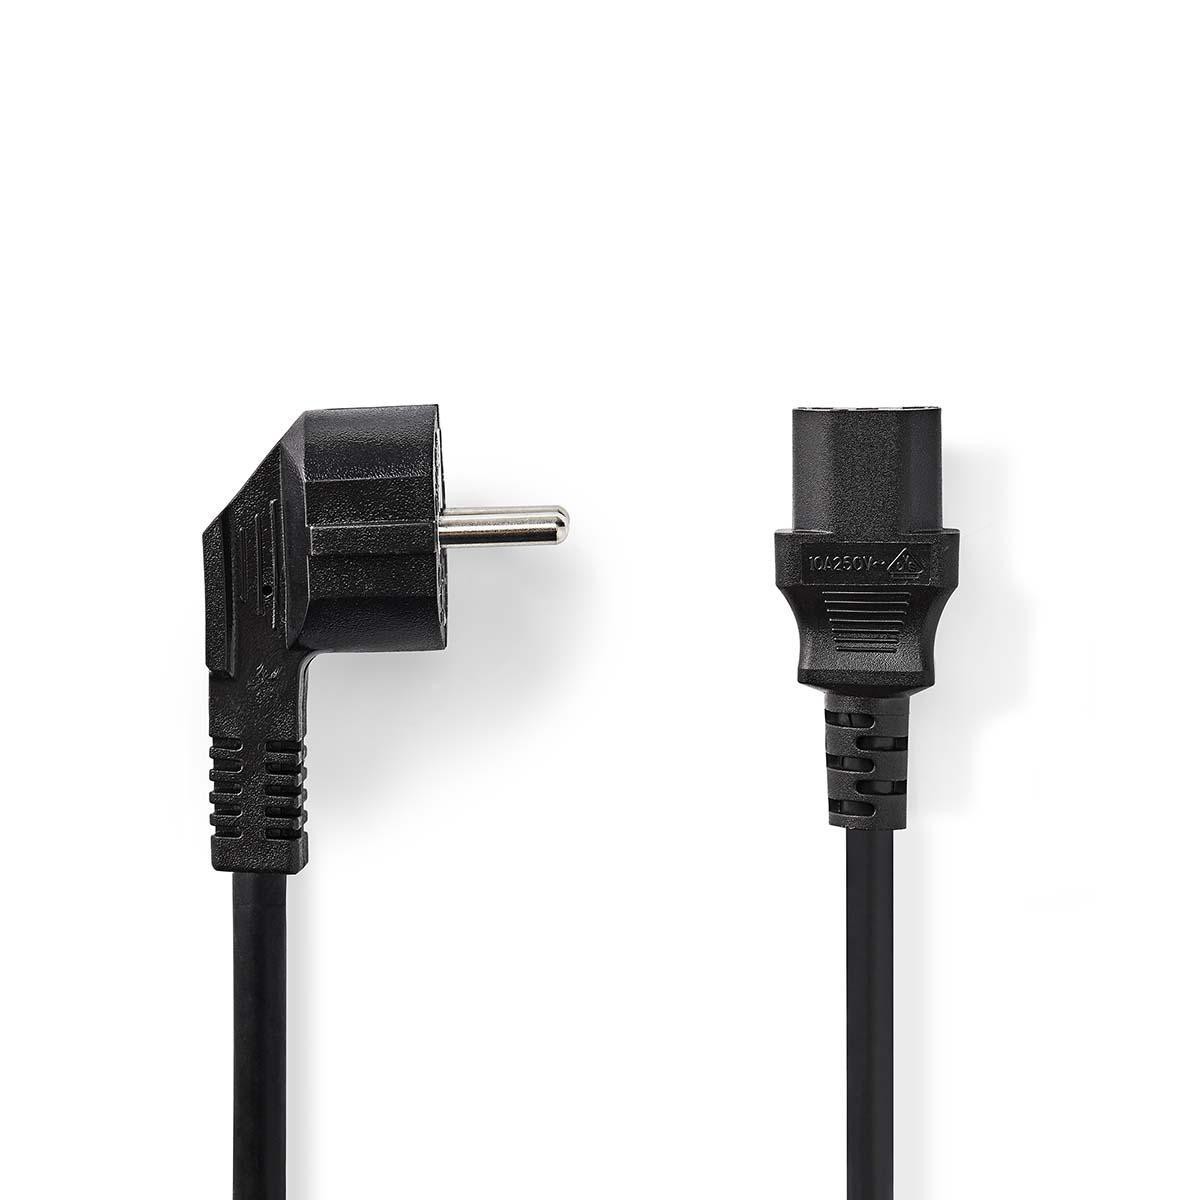 cablu de alimentare 3 x 1.5 mm² schuko tata cotit - iec-320-c13 2.0 m negru nedis